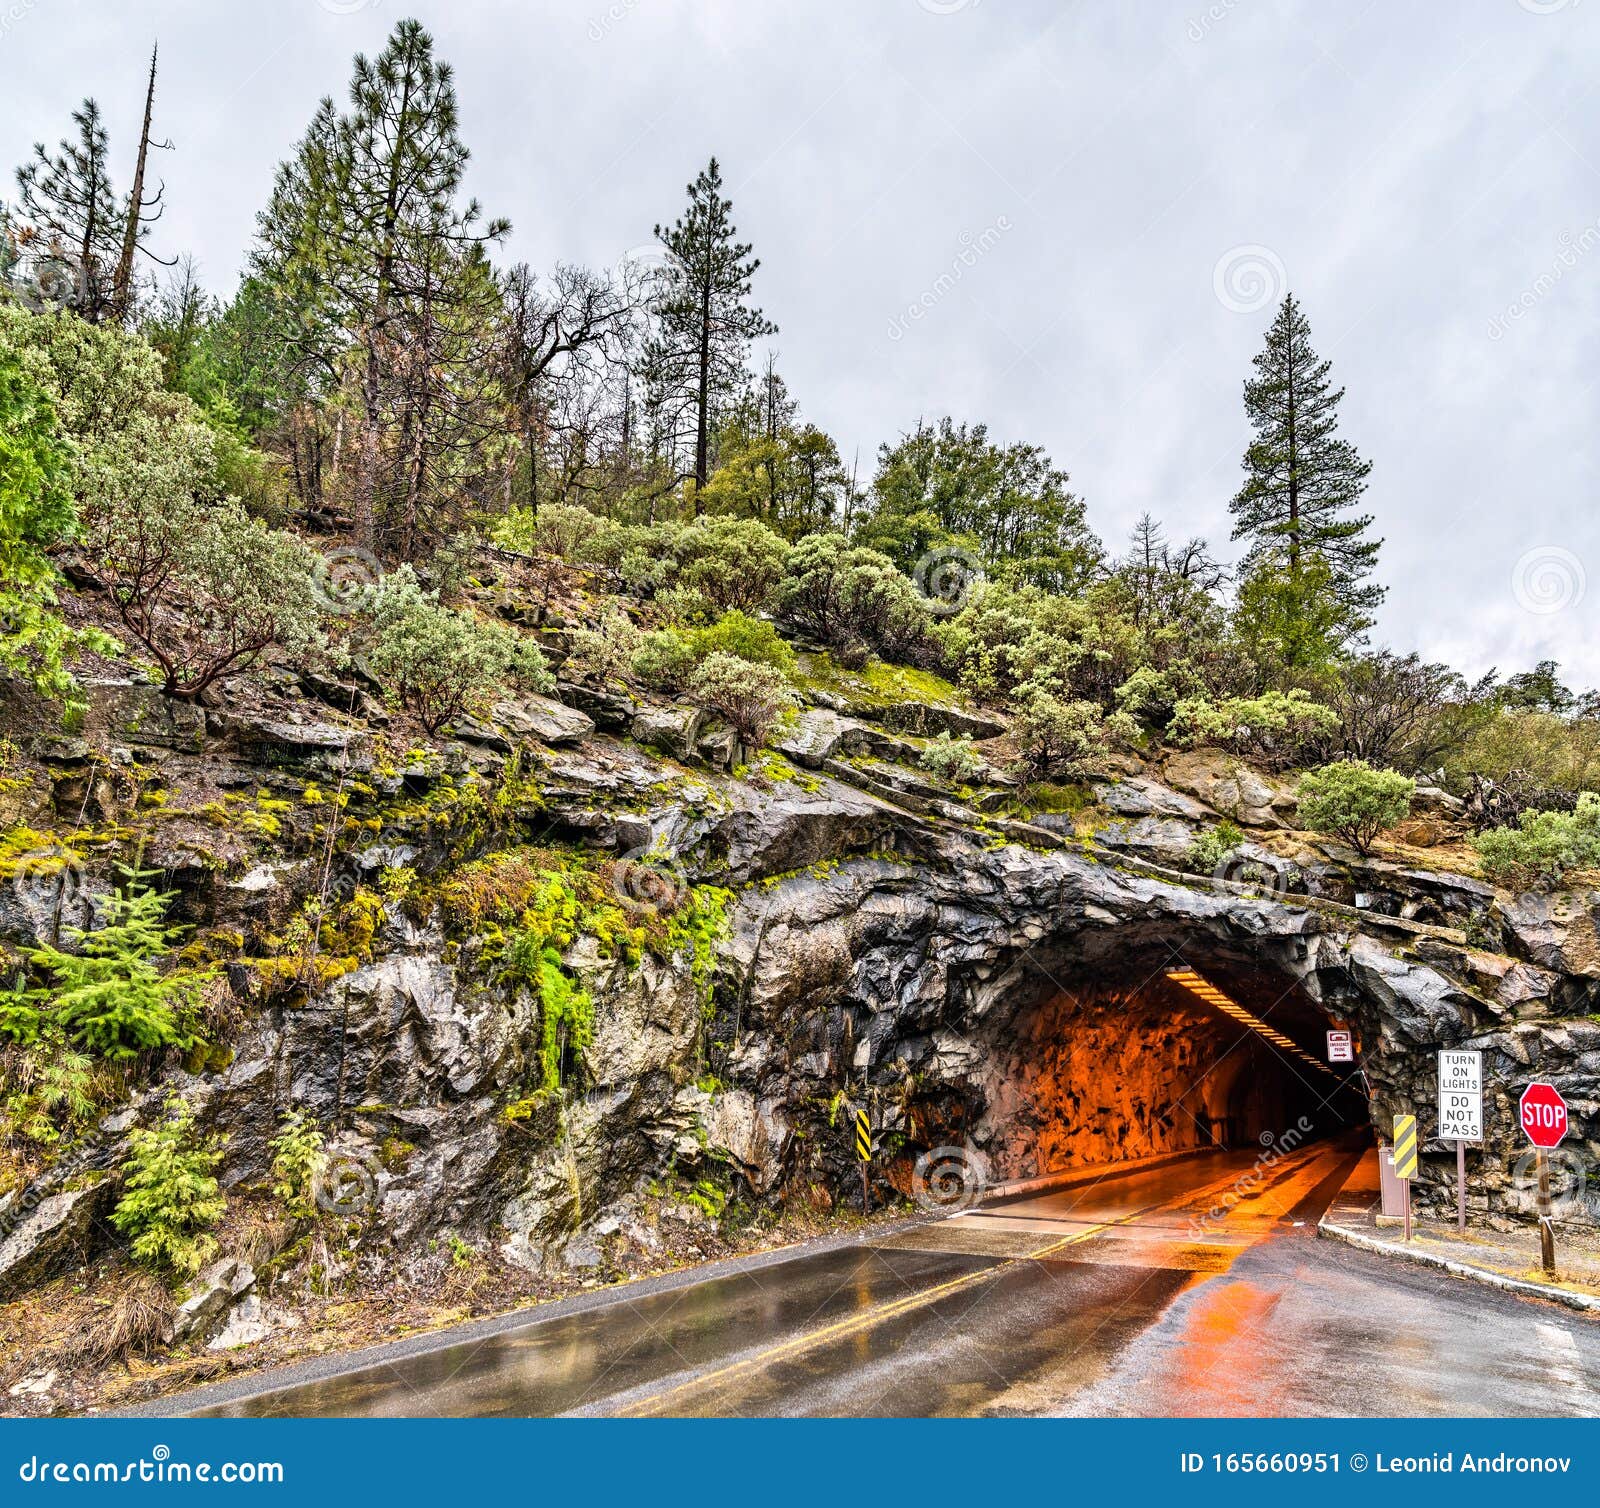 the wawona tunnel in yosemite national park, california